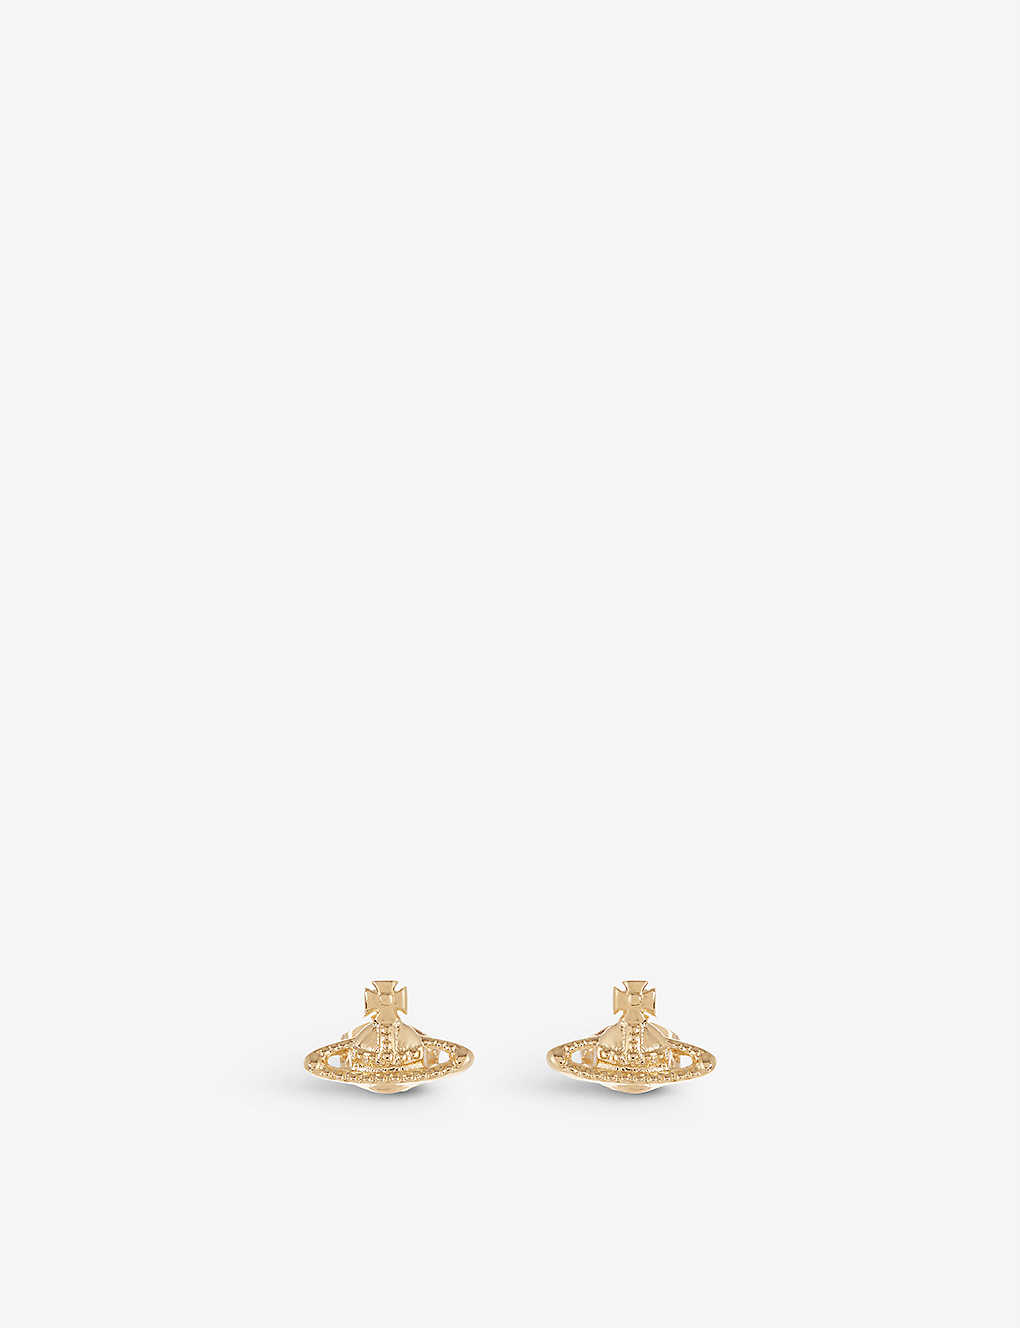 Vivienne Westwood Jewellery Farah Earrings In Gold